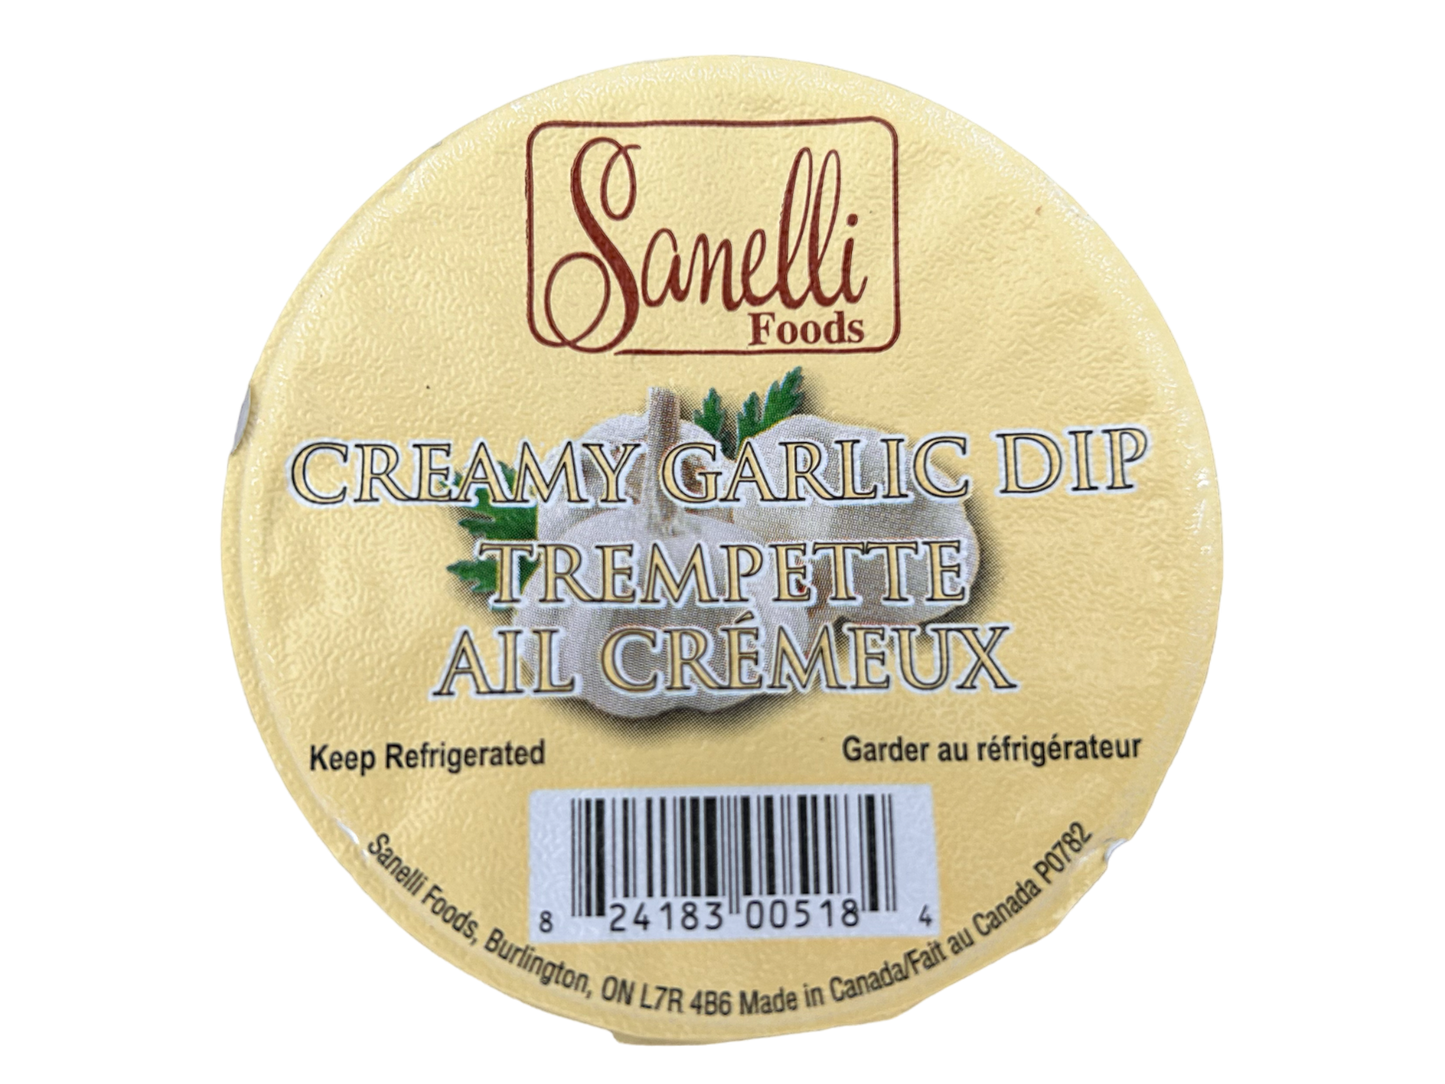 Dip - Creamy Garlic